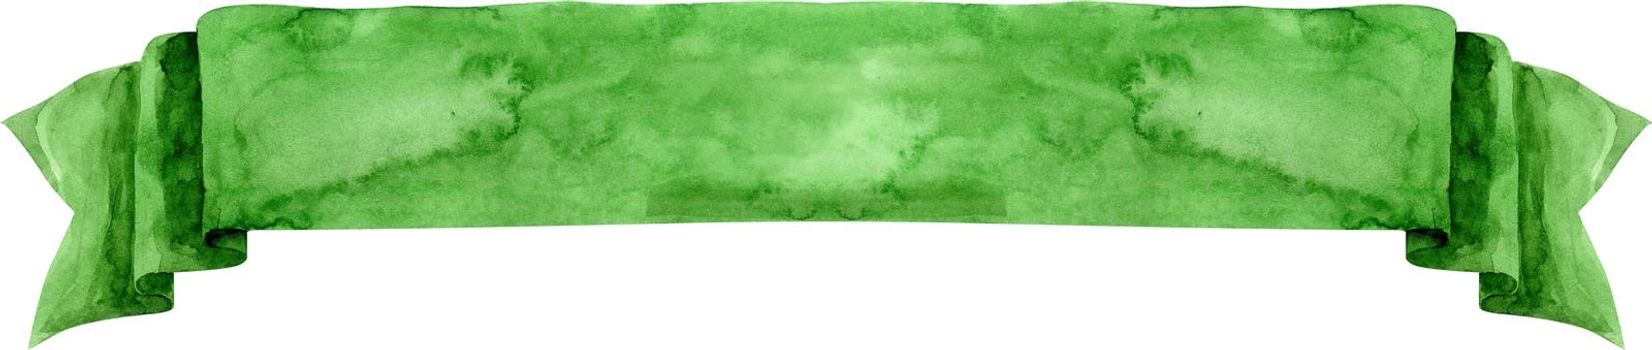 Watercolor hand-drawn illustration. Green waving flag or banner